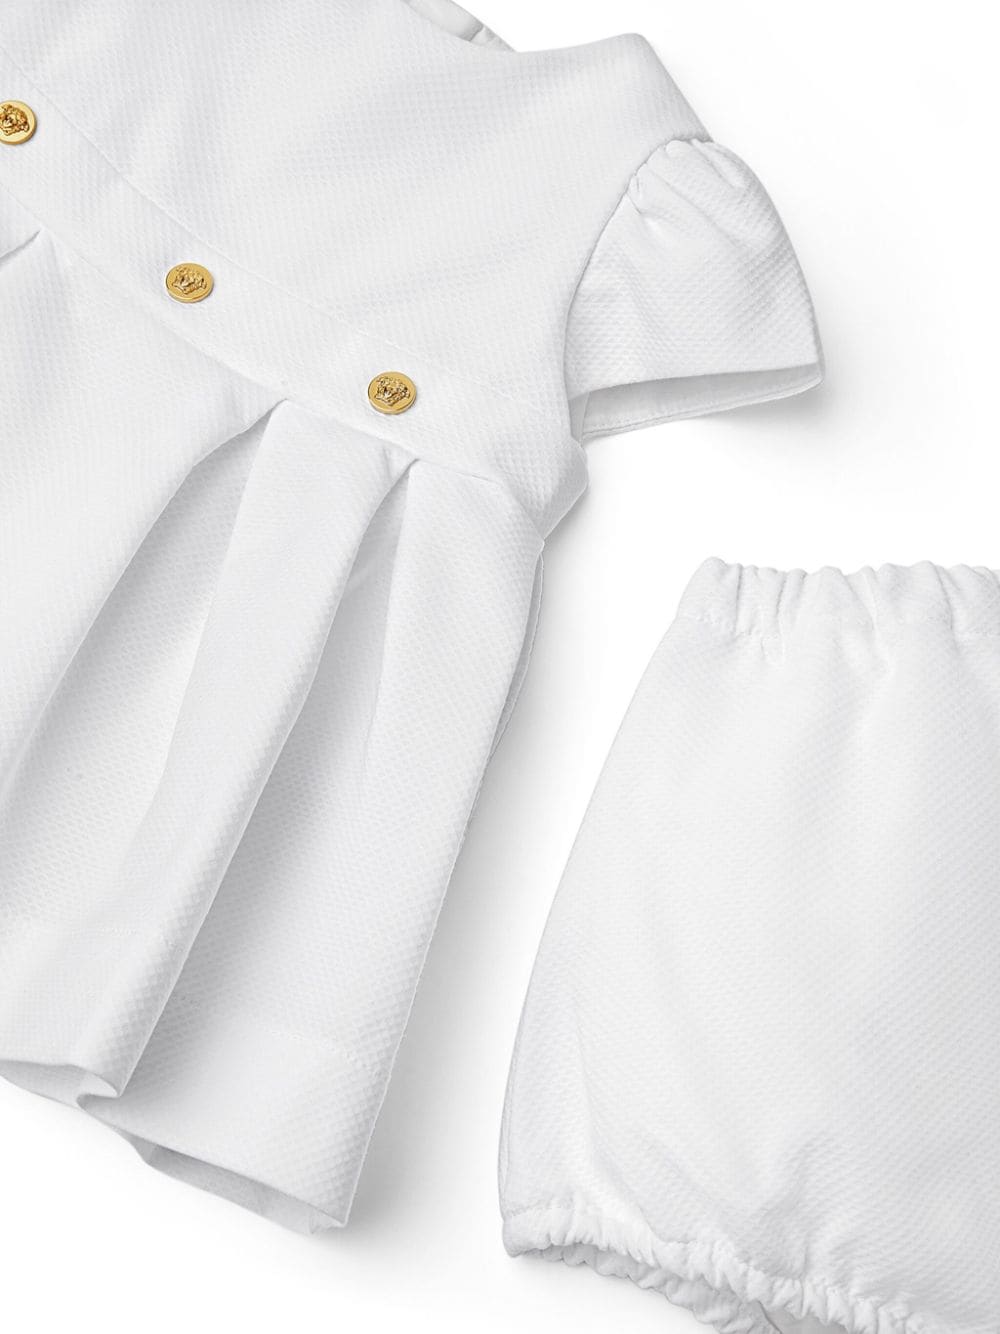 White cotton dress set for baby girls